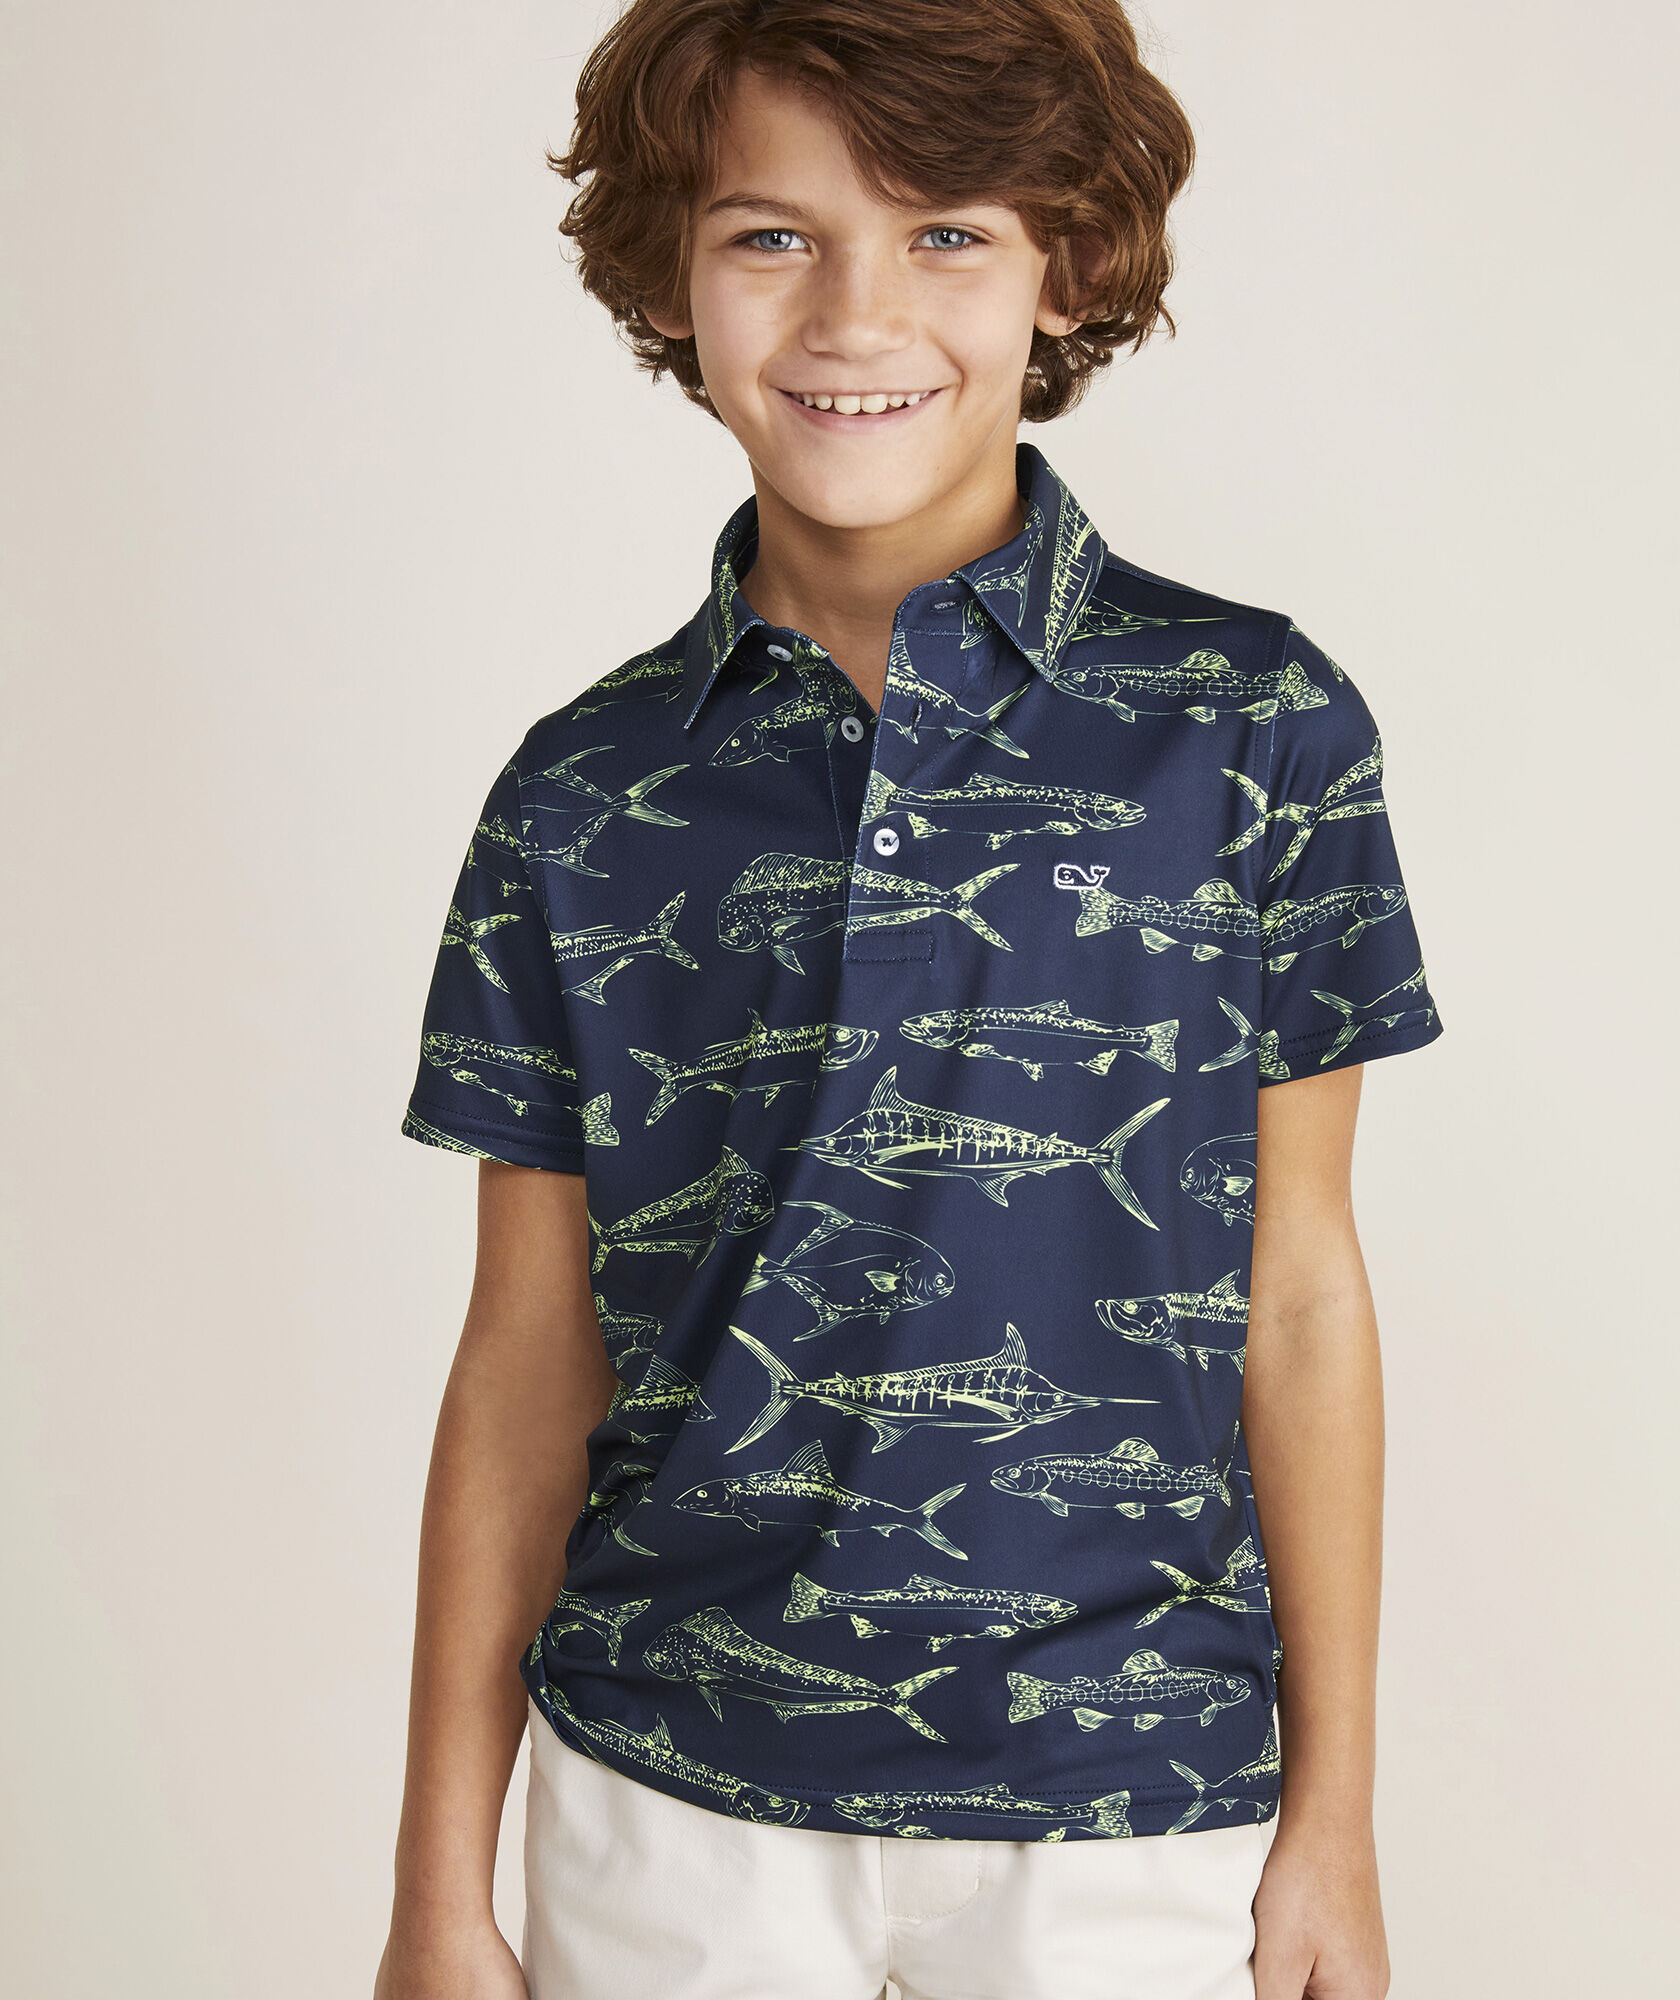 Buy Nautica toddler boy short sleeve embroidered logo polo shirt tan Online